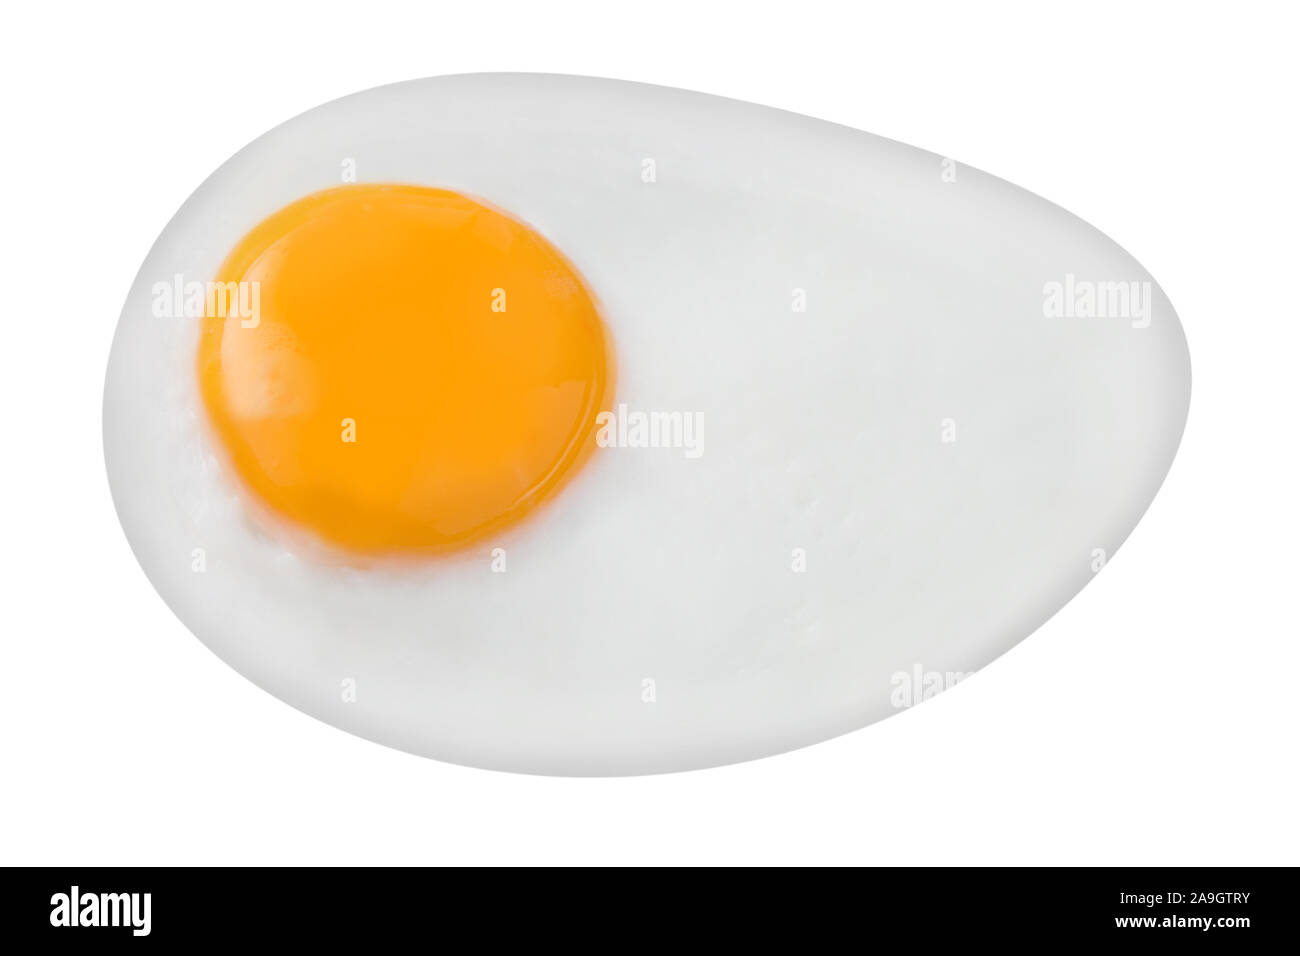 510+ Sunnyside Up Egg Stock Illustrations, Royalty-Free Vector Graphics &  Clip Art - iStock